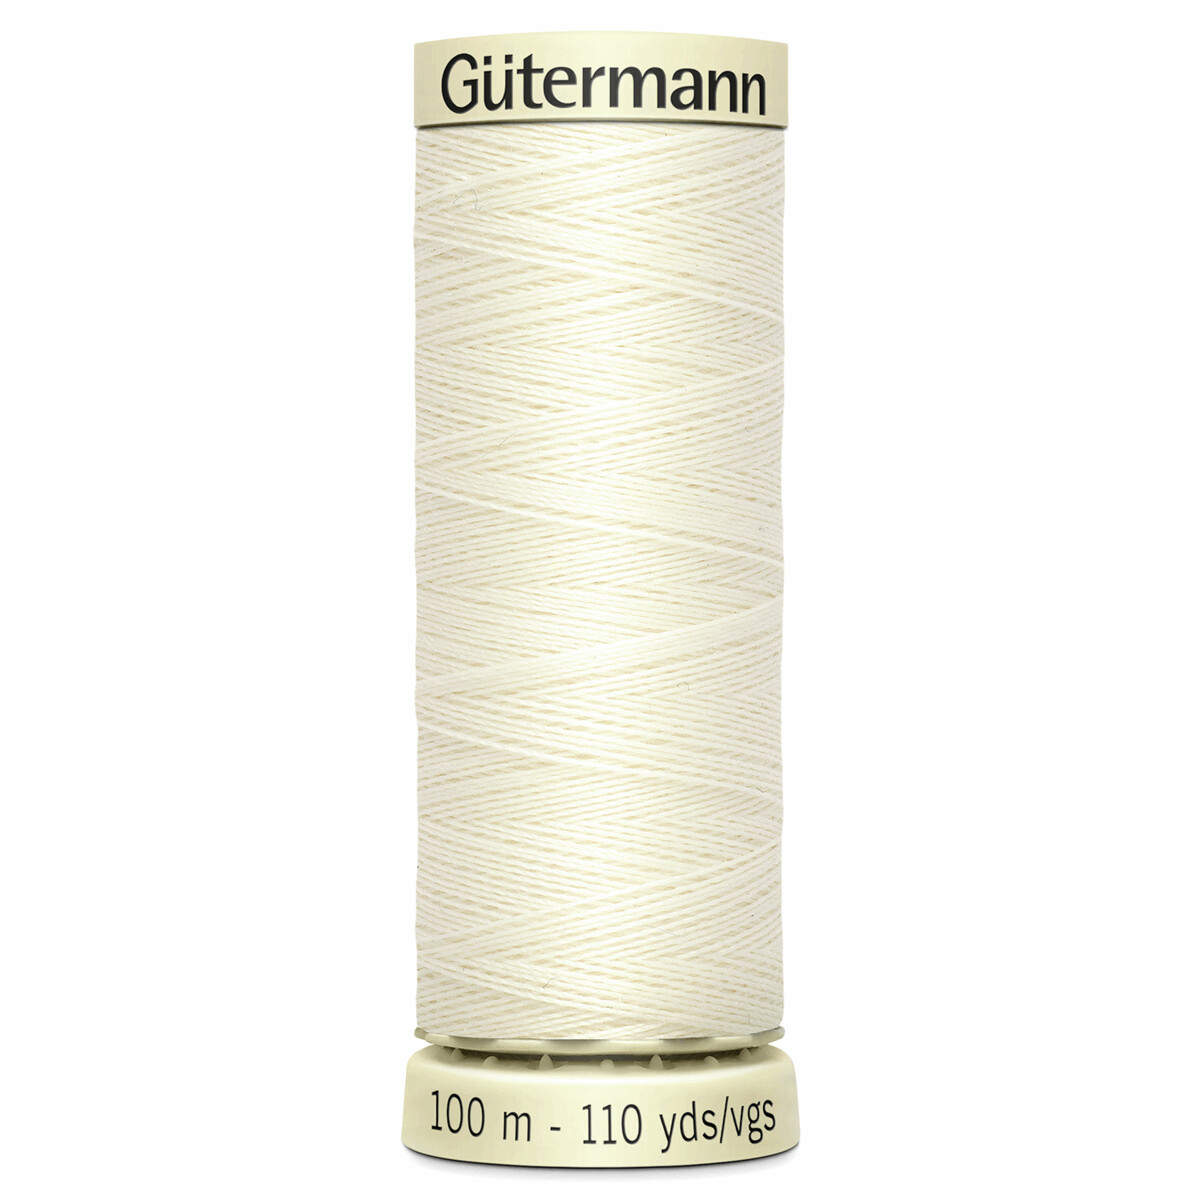 Gutermann Sew-All thread White 800